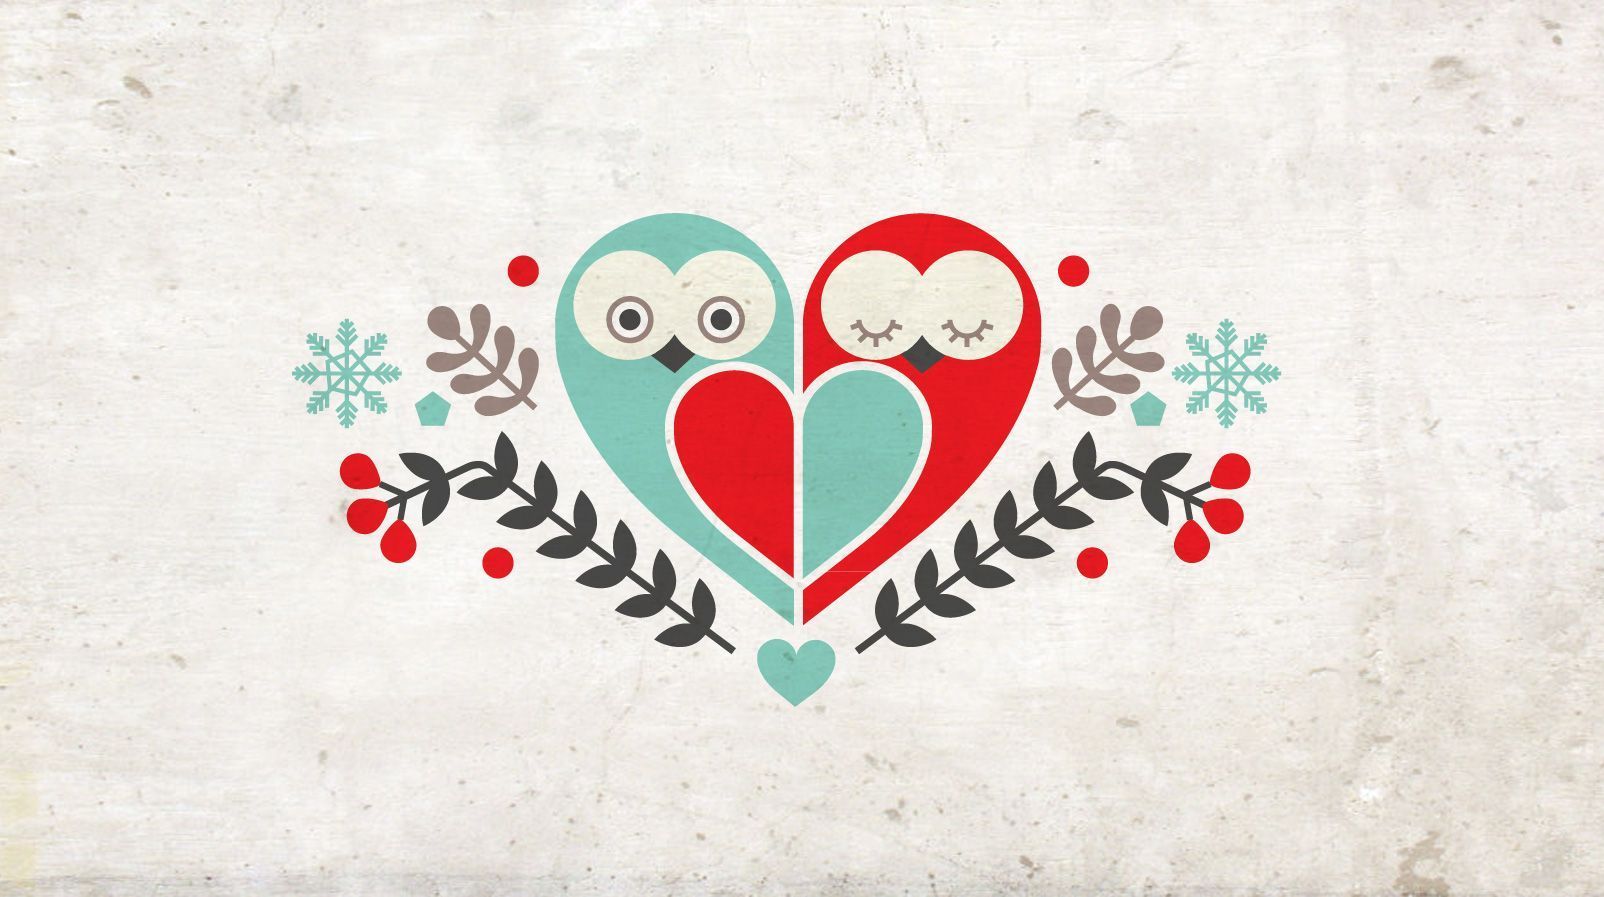 Top Cute Owl Desktop Wallpaper Images for Pinterest